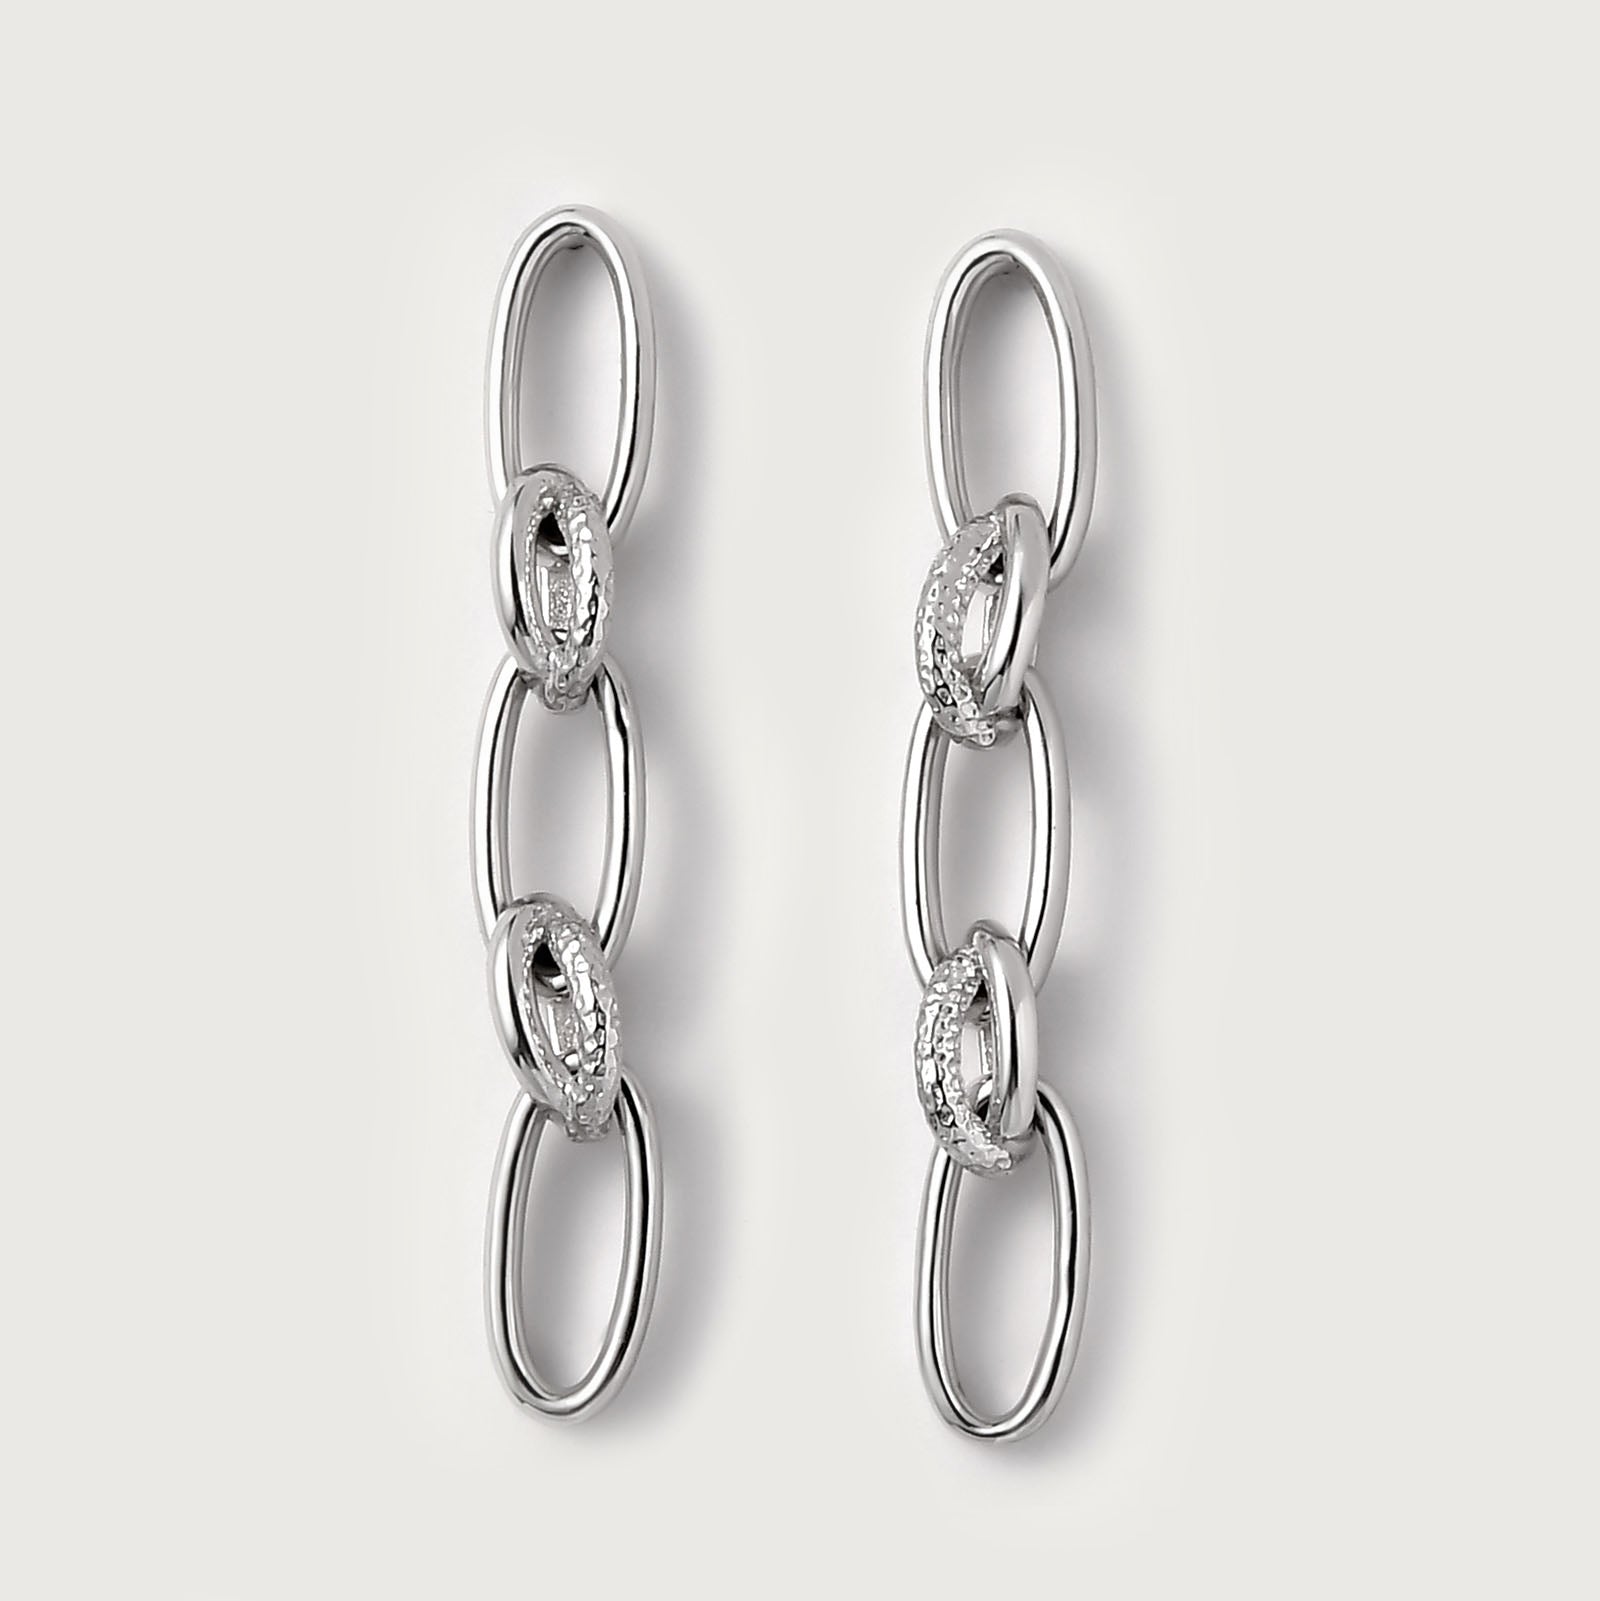 Rachel Galley Jewellery - Designer Rings, Earrings, & More for Women